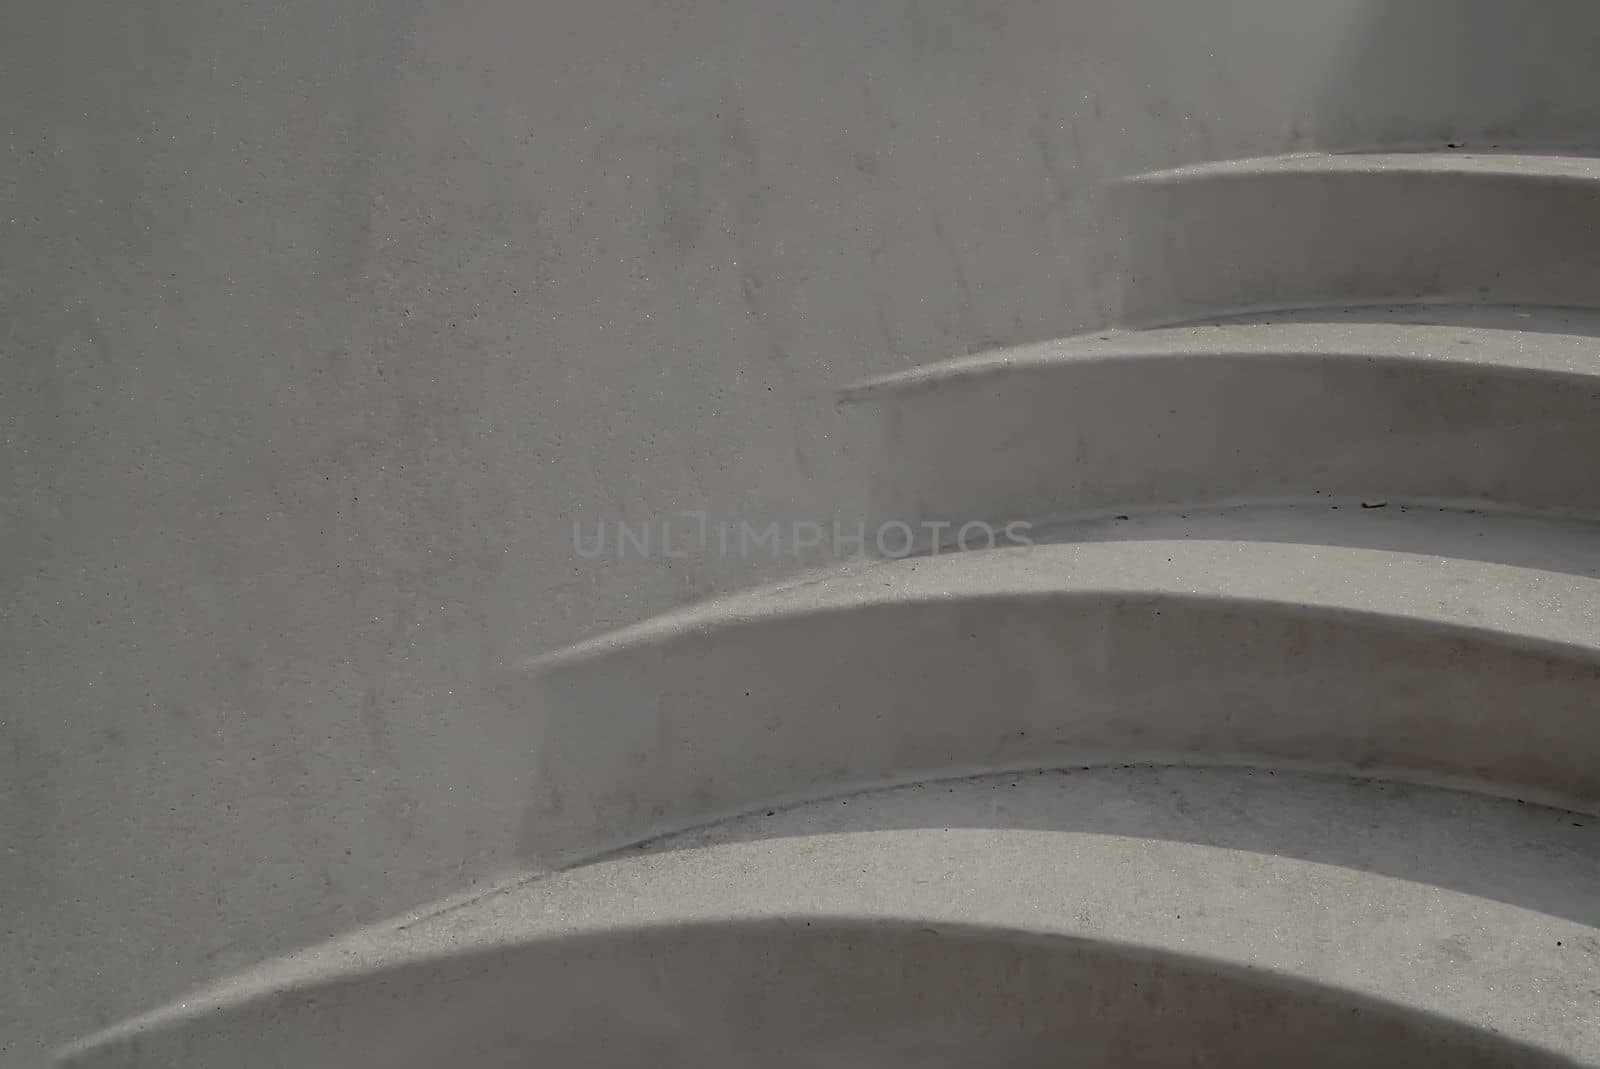 Architecture stairway design pattern often seen on monuments and landmarks. by tosirikul